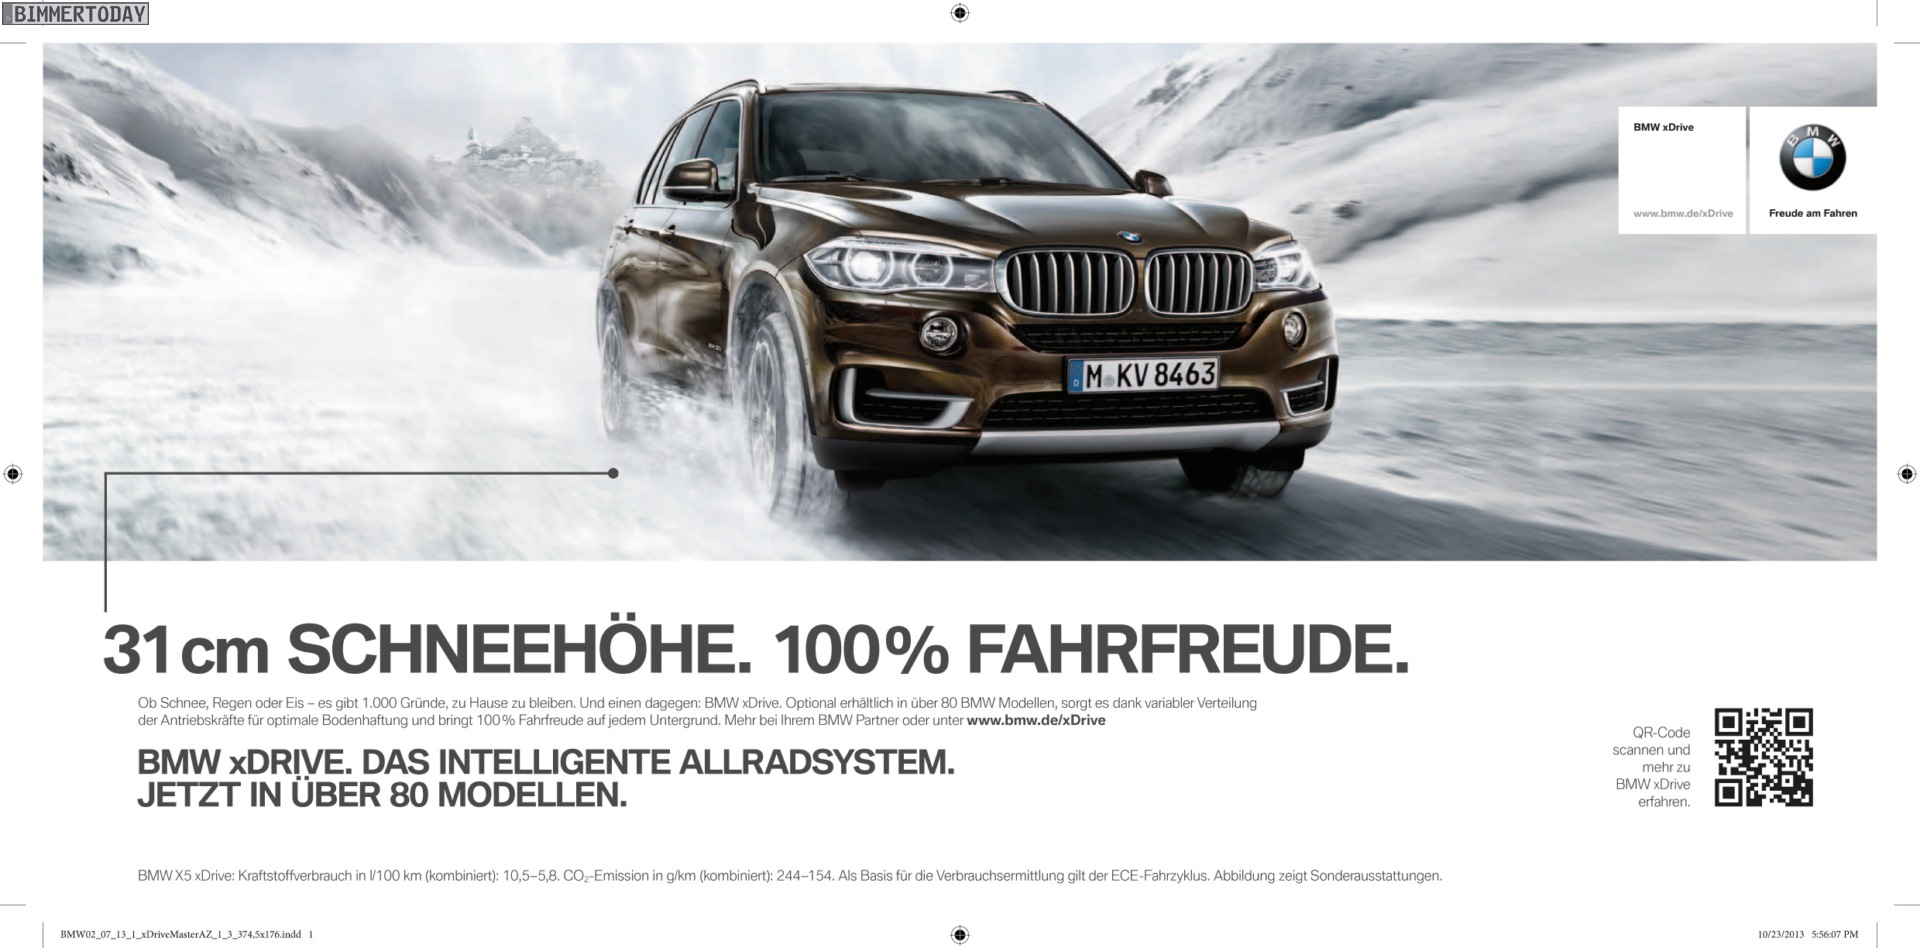 Marketing Localization: German BMW Marketing Campaign